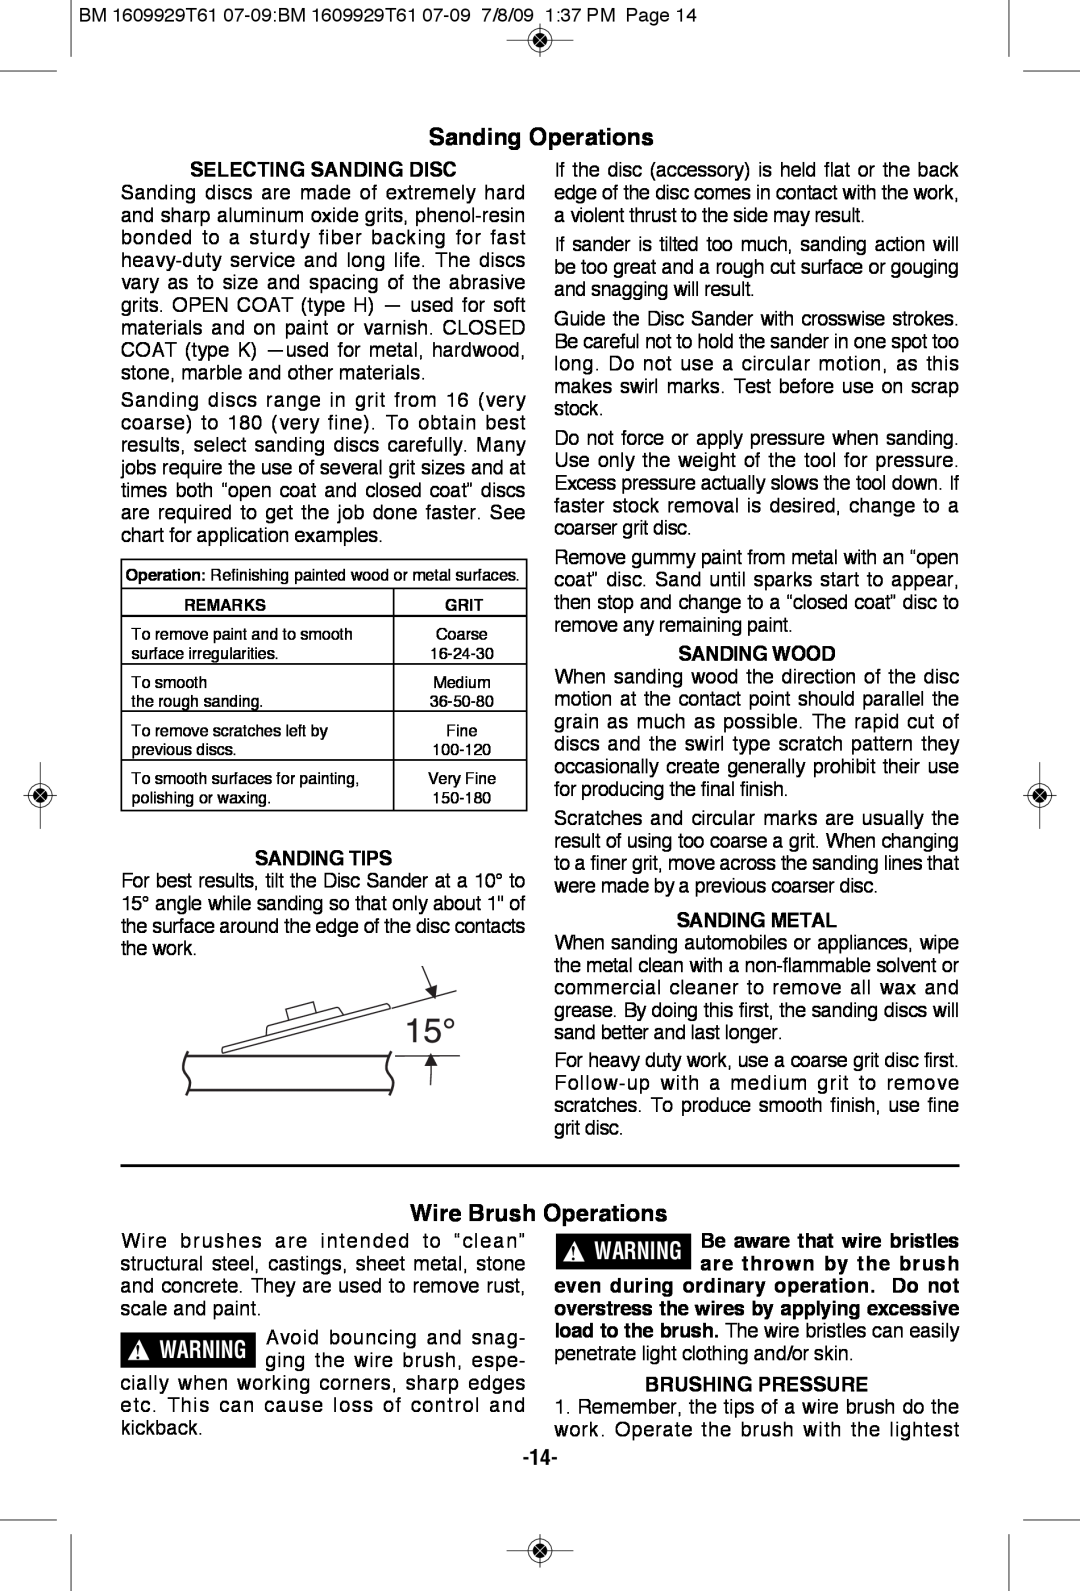 Bosch Power Tools 1994-6D Sanding Operations, Wire Brush Operations, Selecting Sanding Disc, Sanding Tips, Sanding Wood 